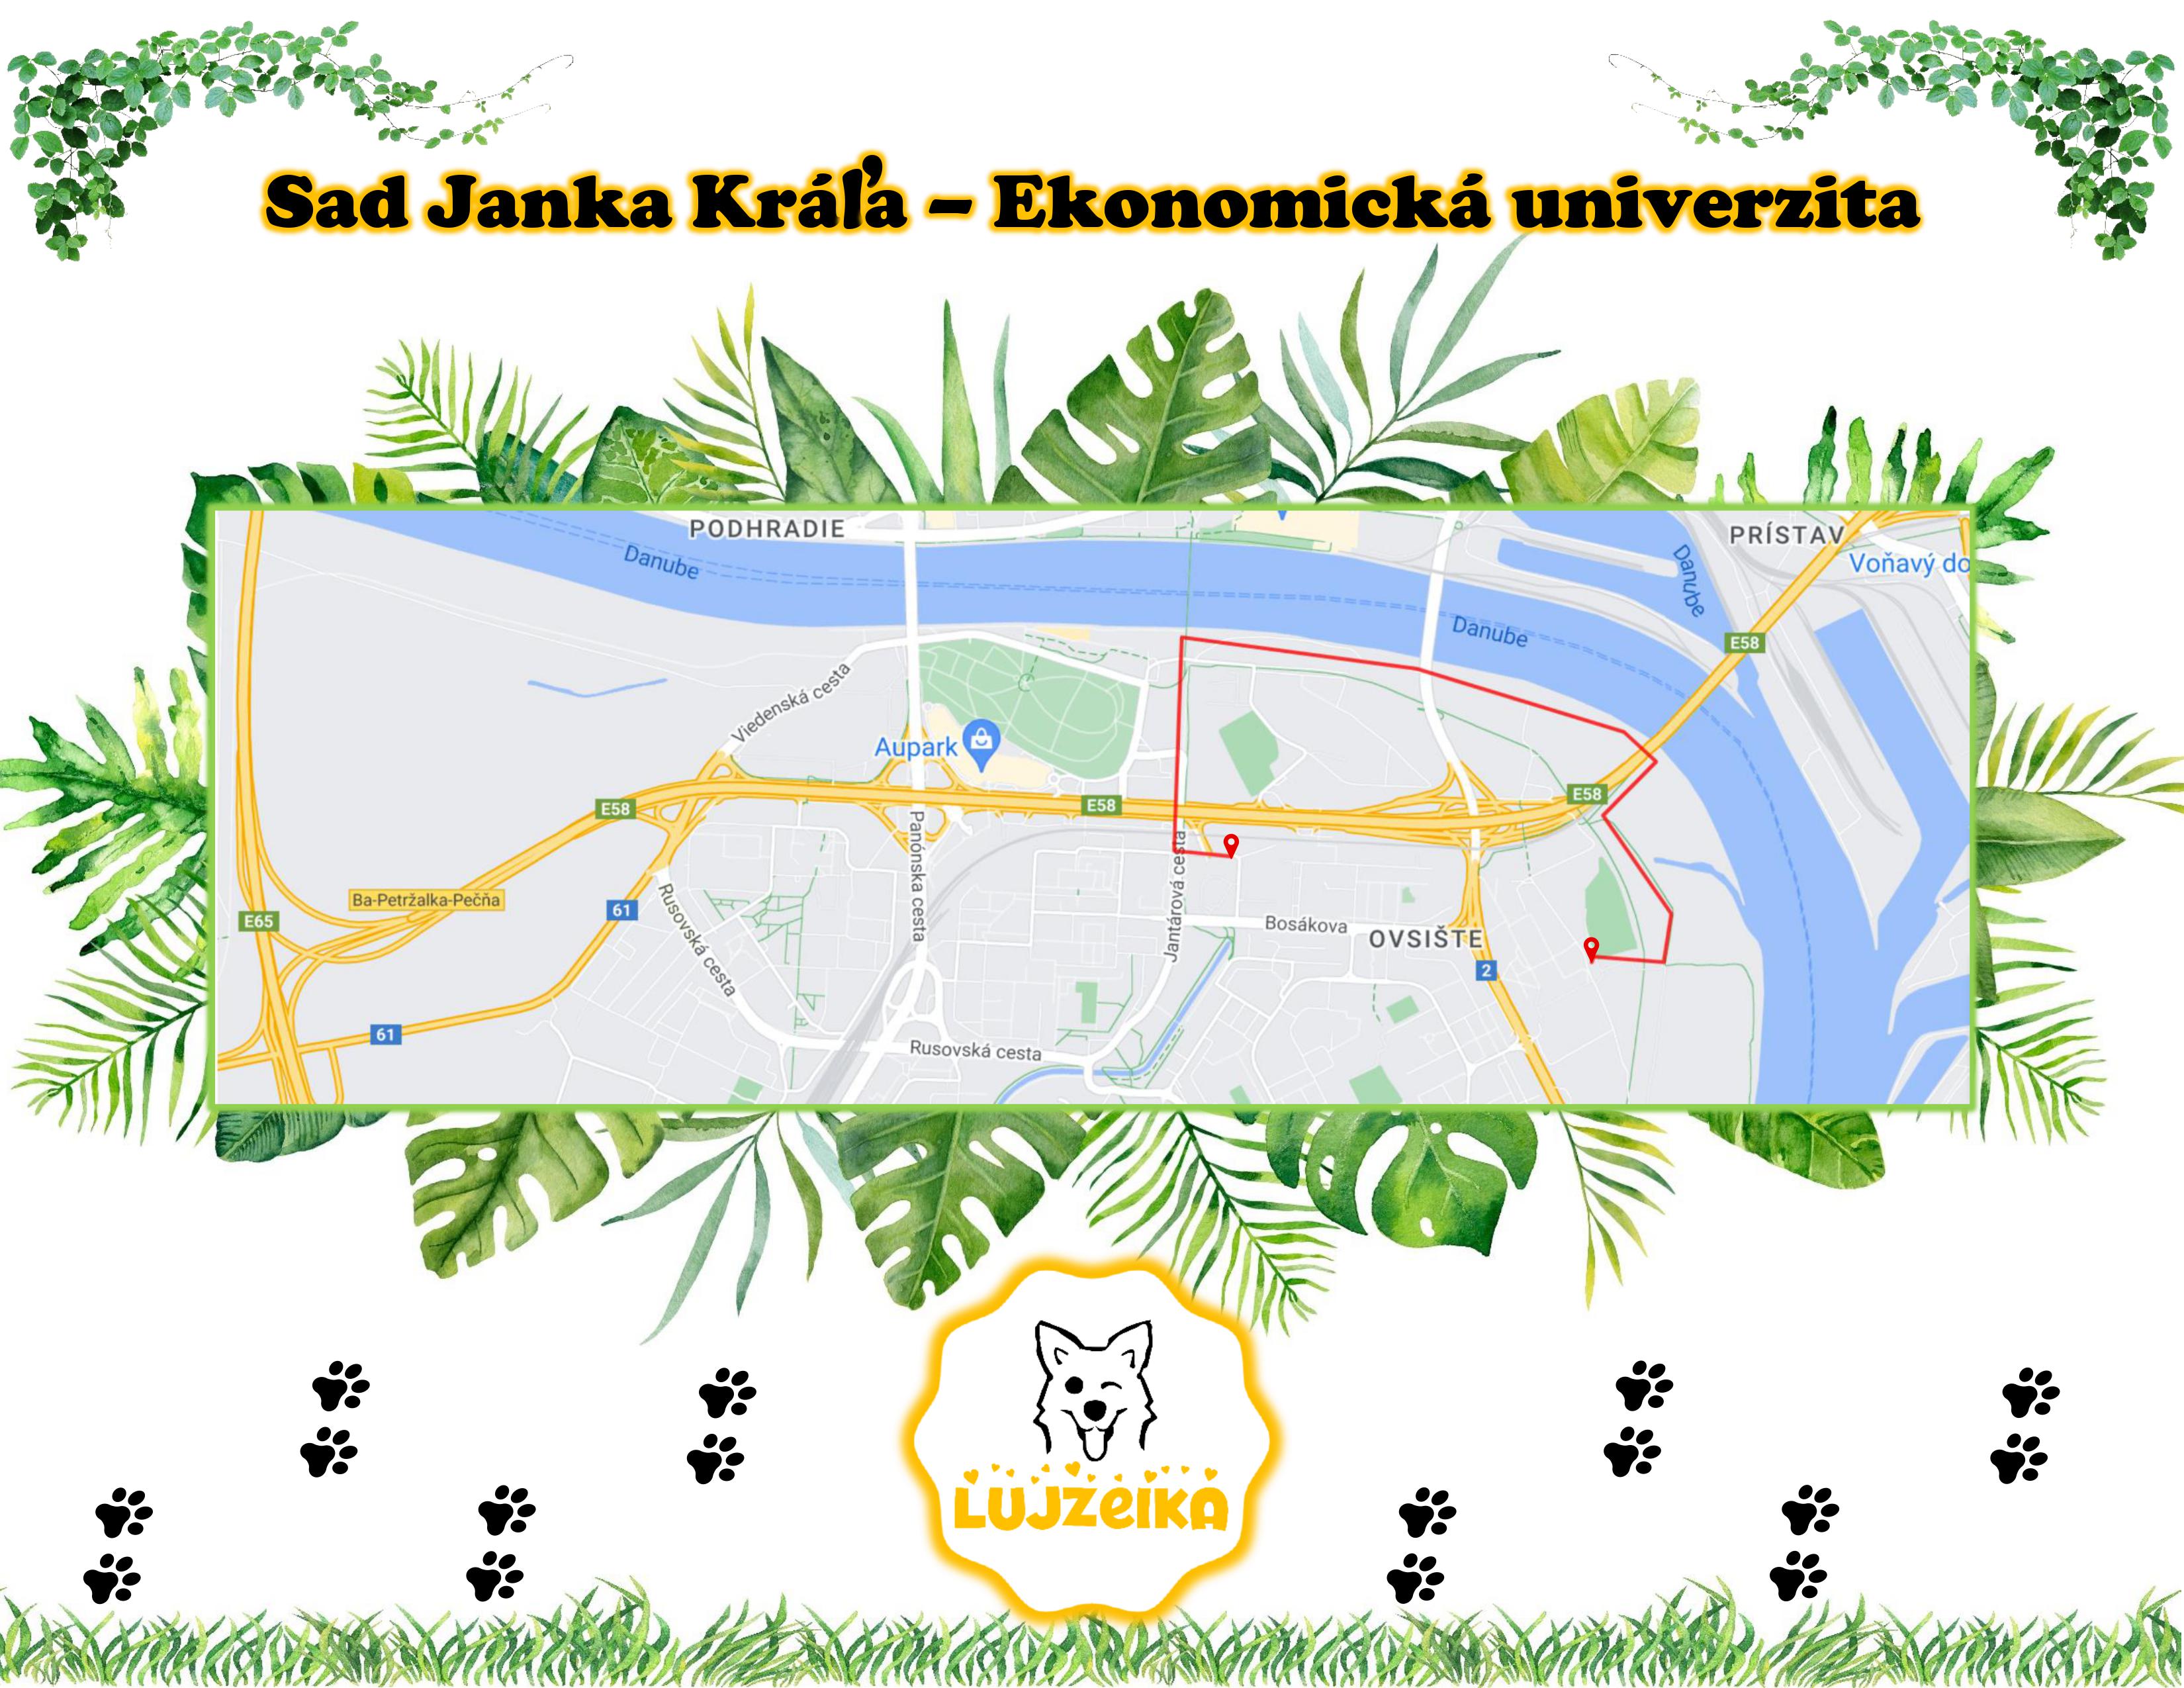 Lujzeika - Mapa Sad Janka Kra - Ekonomick univerzitajpg